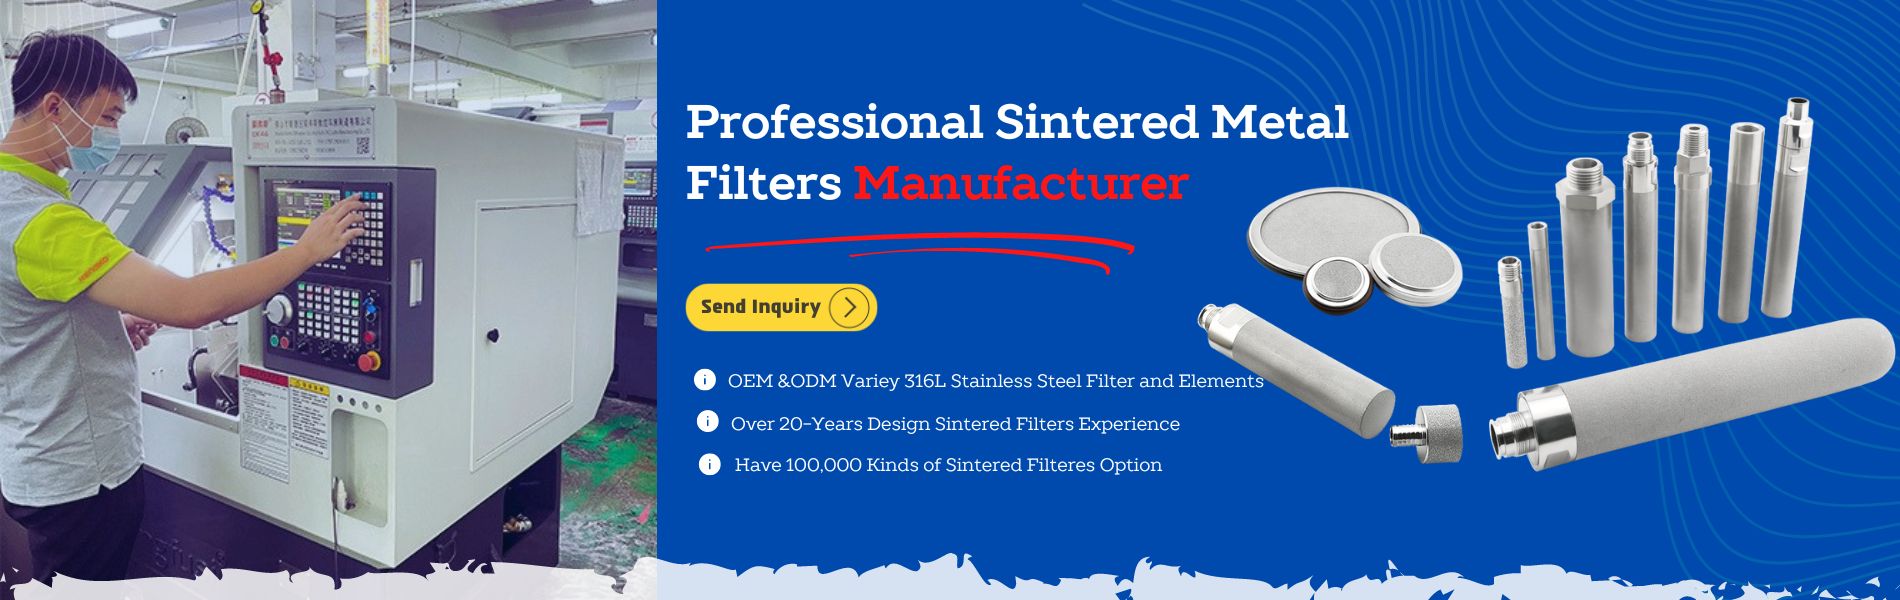 Fabricante profesional de filtros metálicos sinterizados